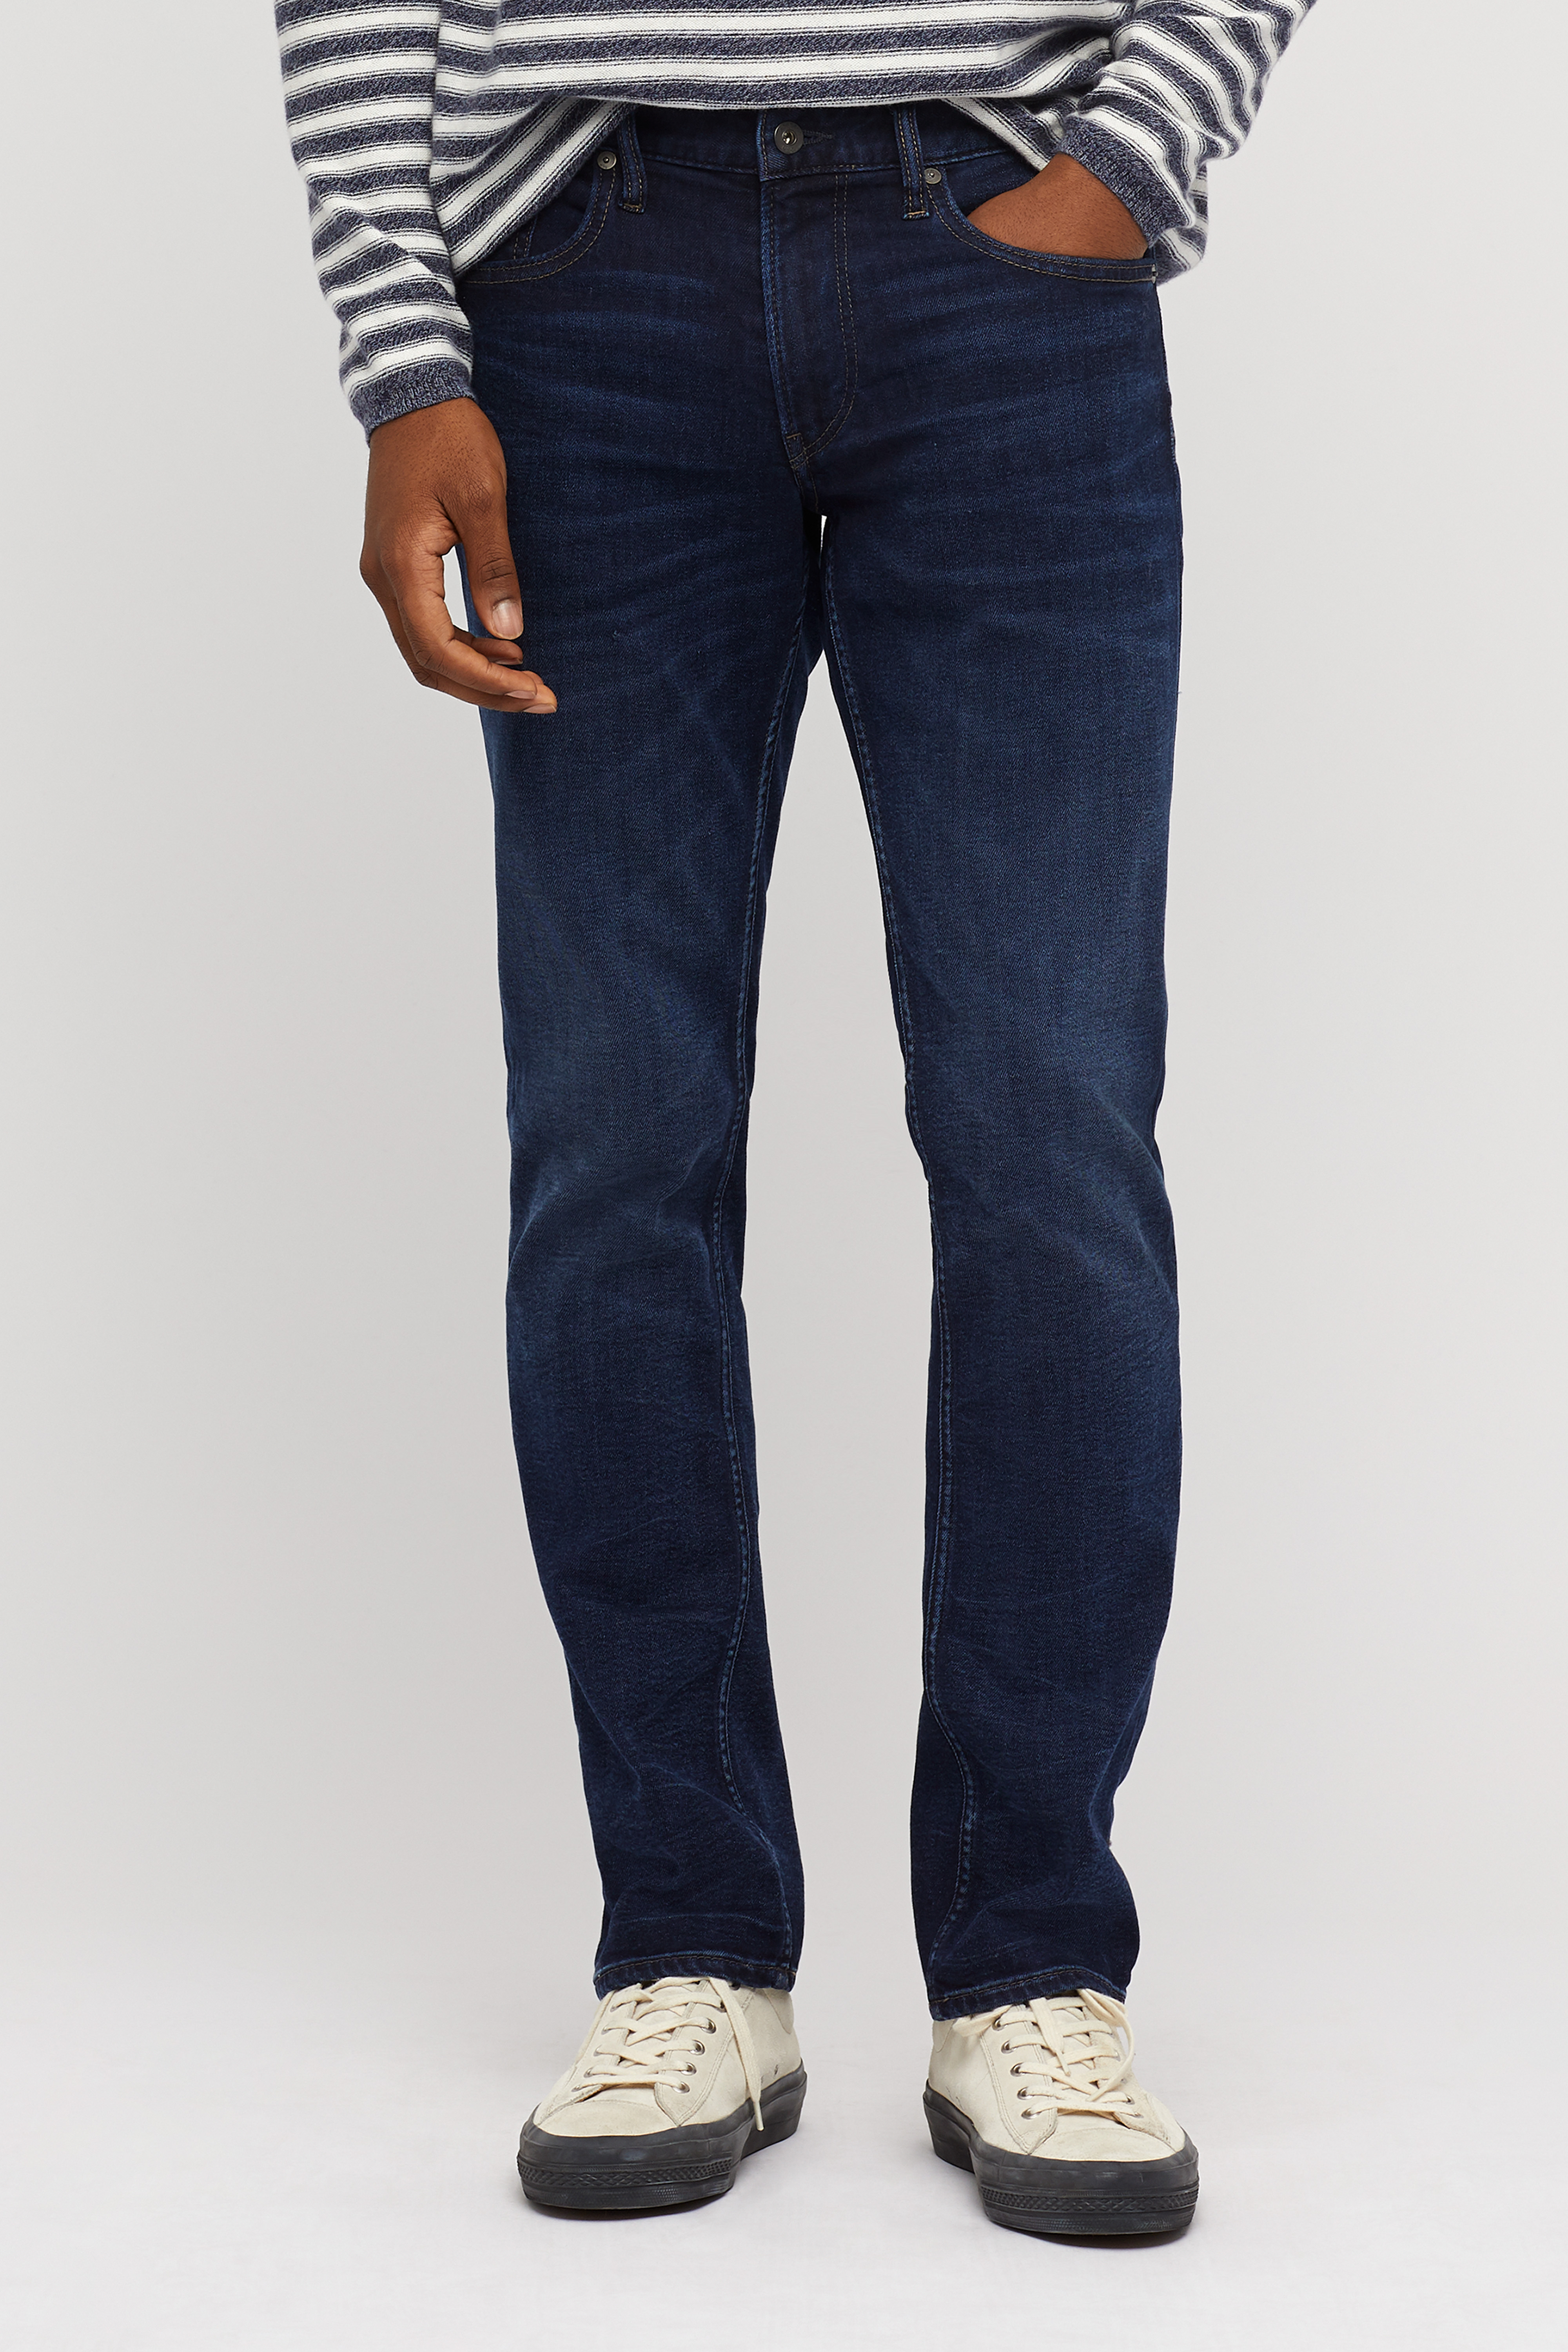 bonobos lightweight jeans